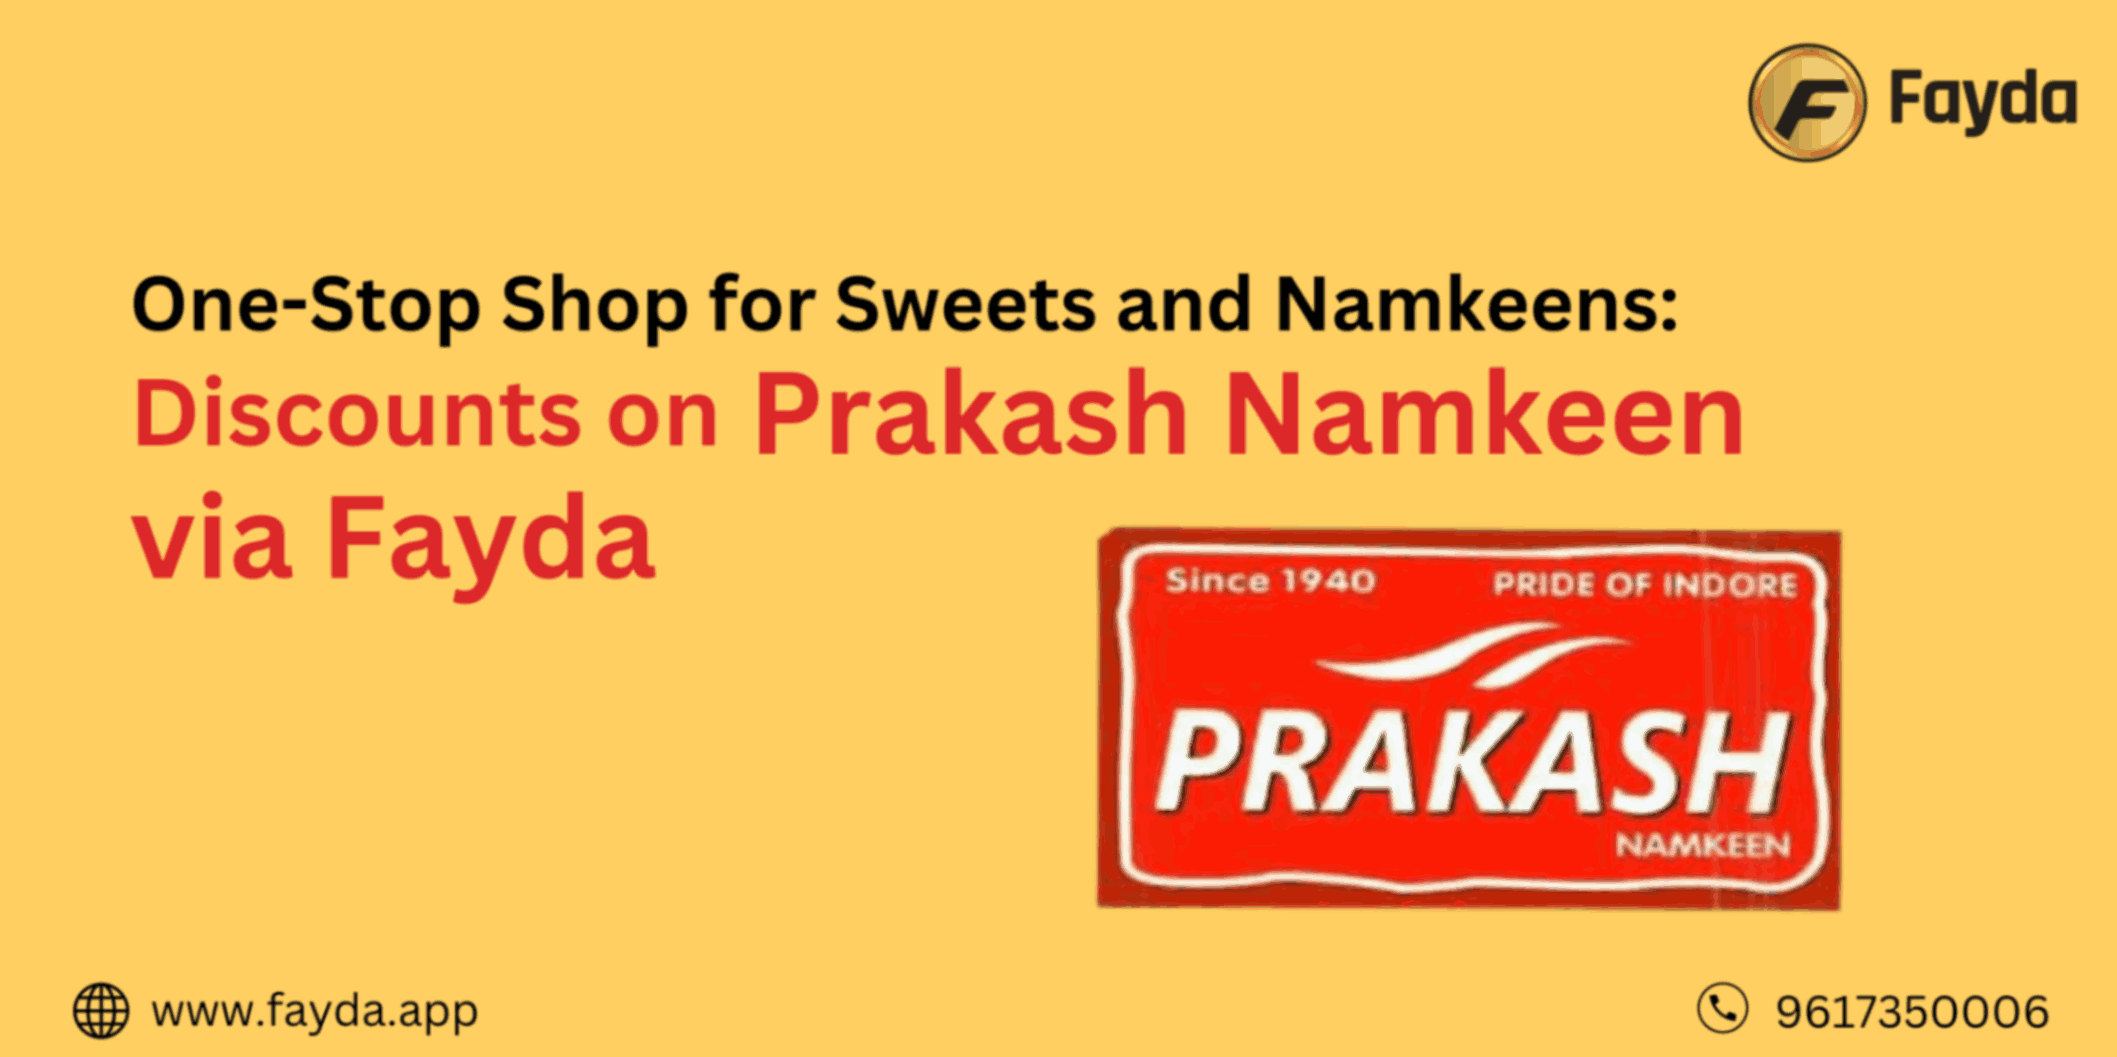 One-Stop Shop for Sweets and Namkeens: Discounts on Prakash Namkeen via Fayda